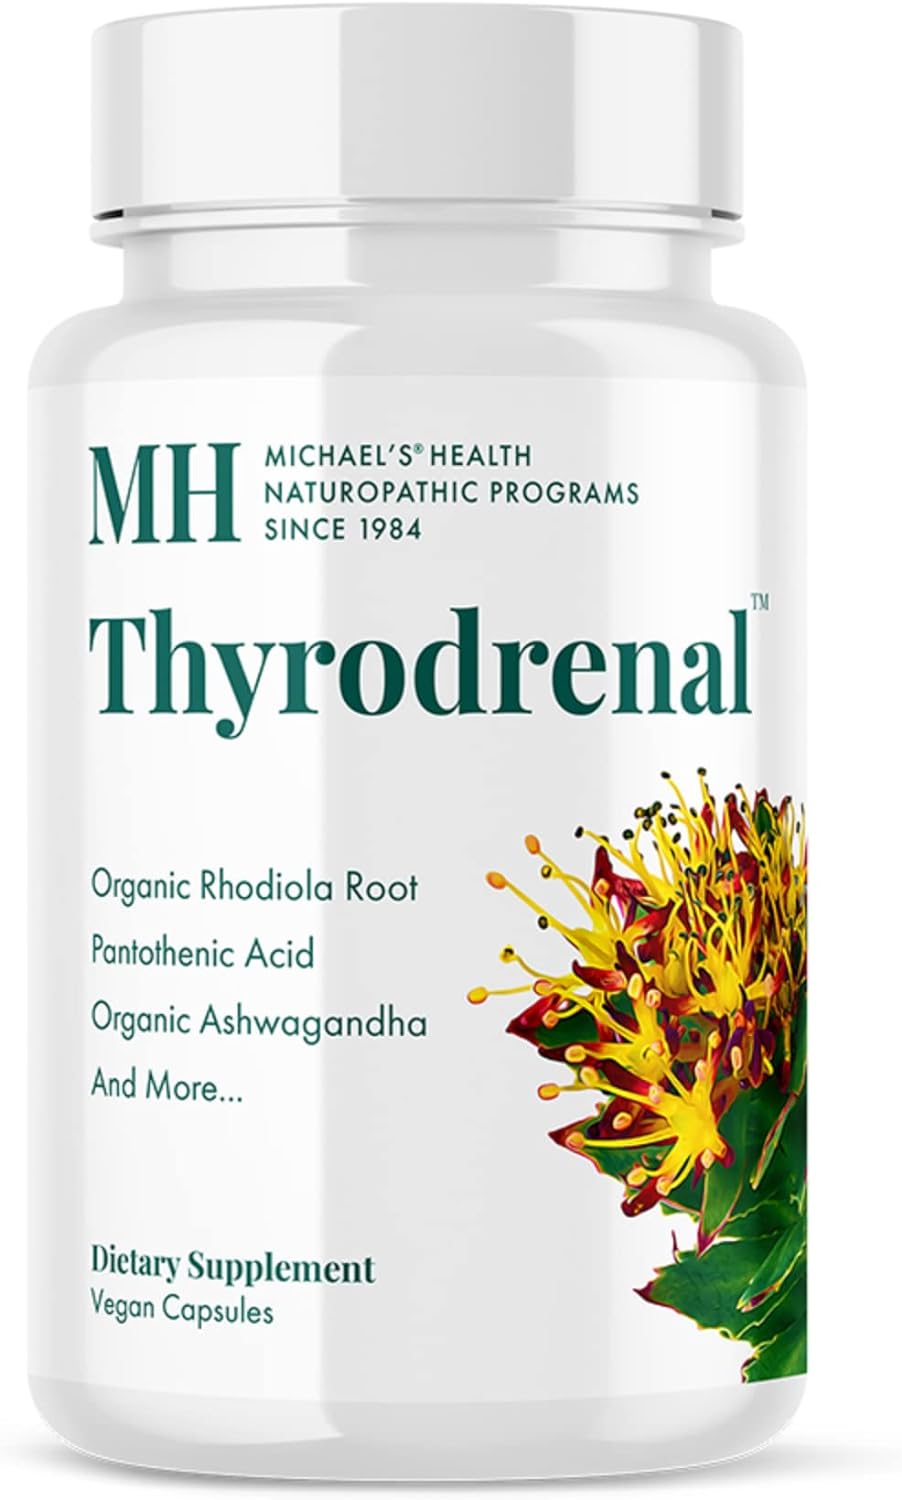 MICHAEL'S Health Naturopathic Programs Thyrodrenal - 60 Vegan Capsules2.57 Ounces